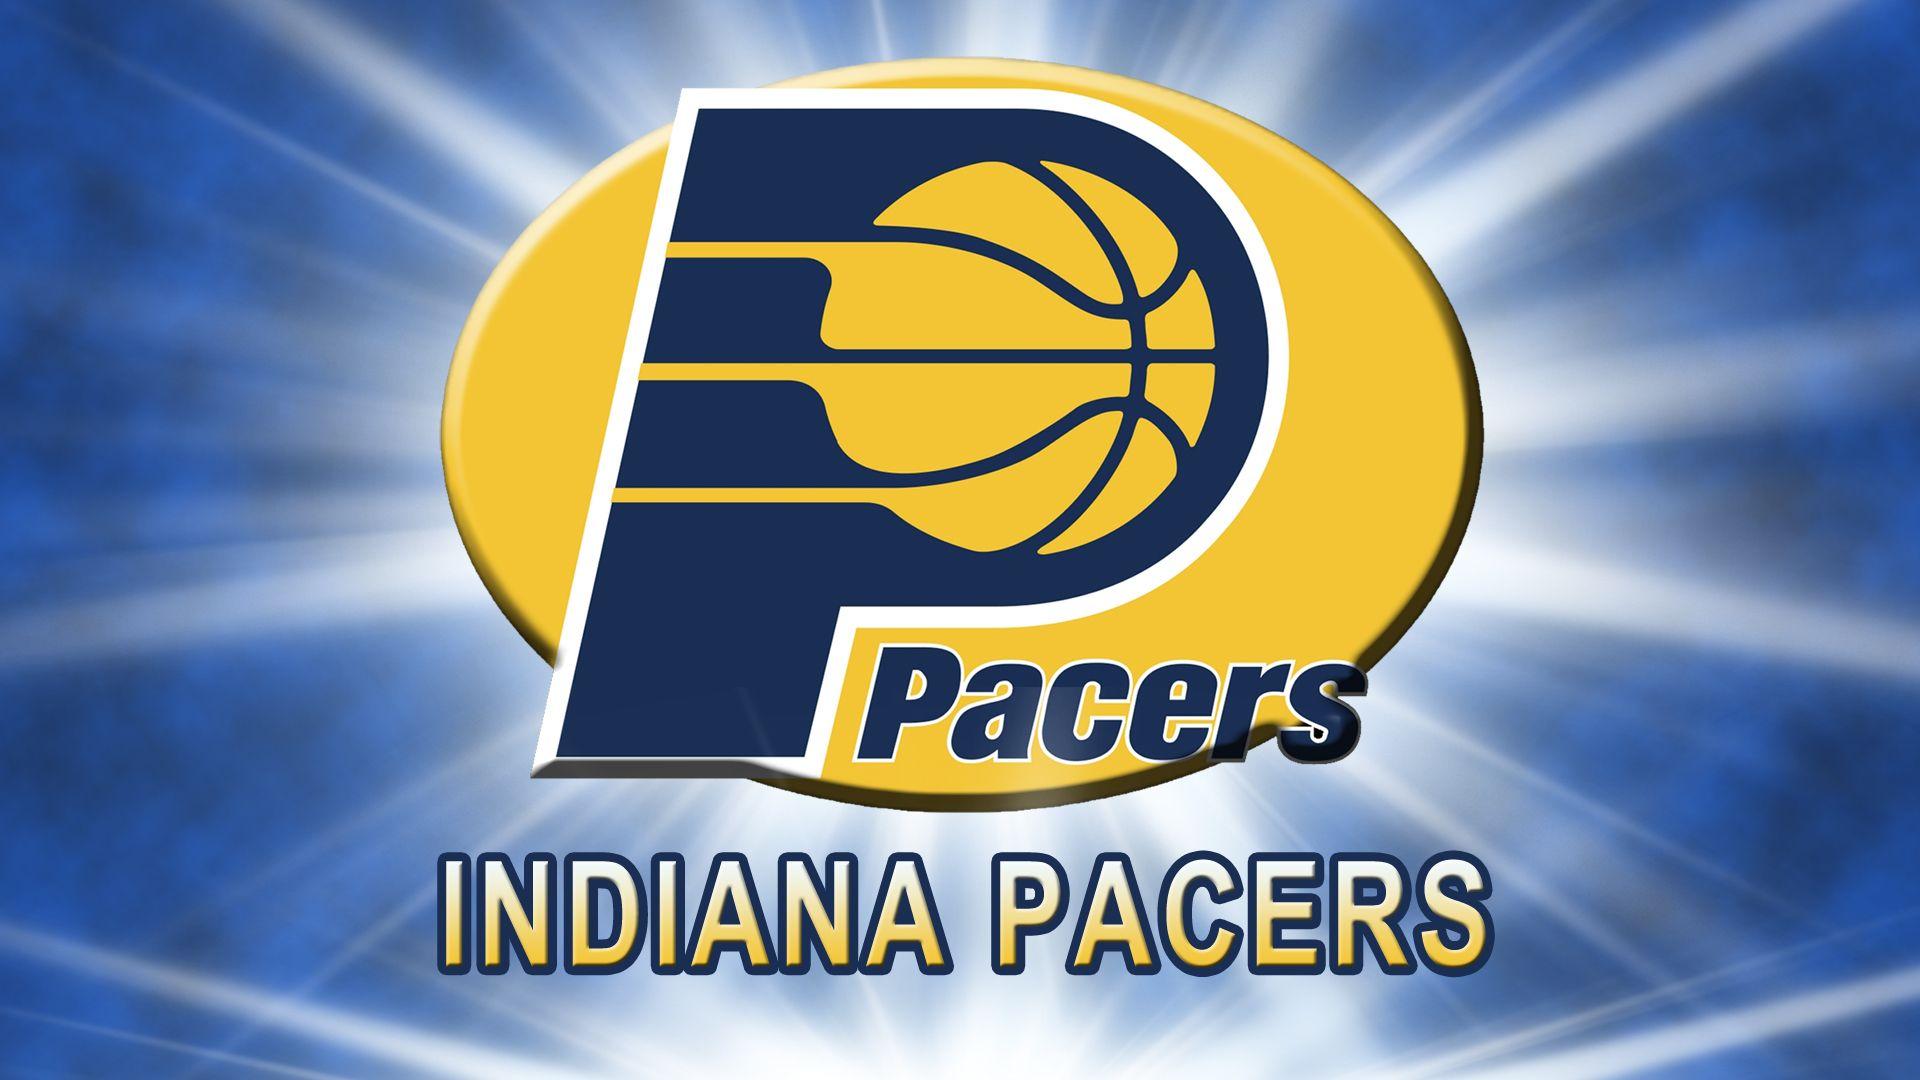 Indiana Pacers. Full HD Widescreen wallpaper for desktop